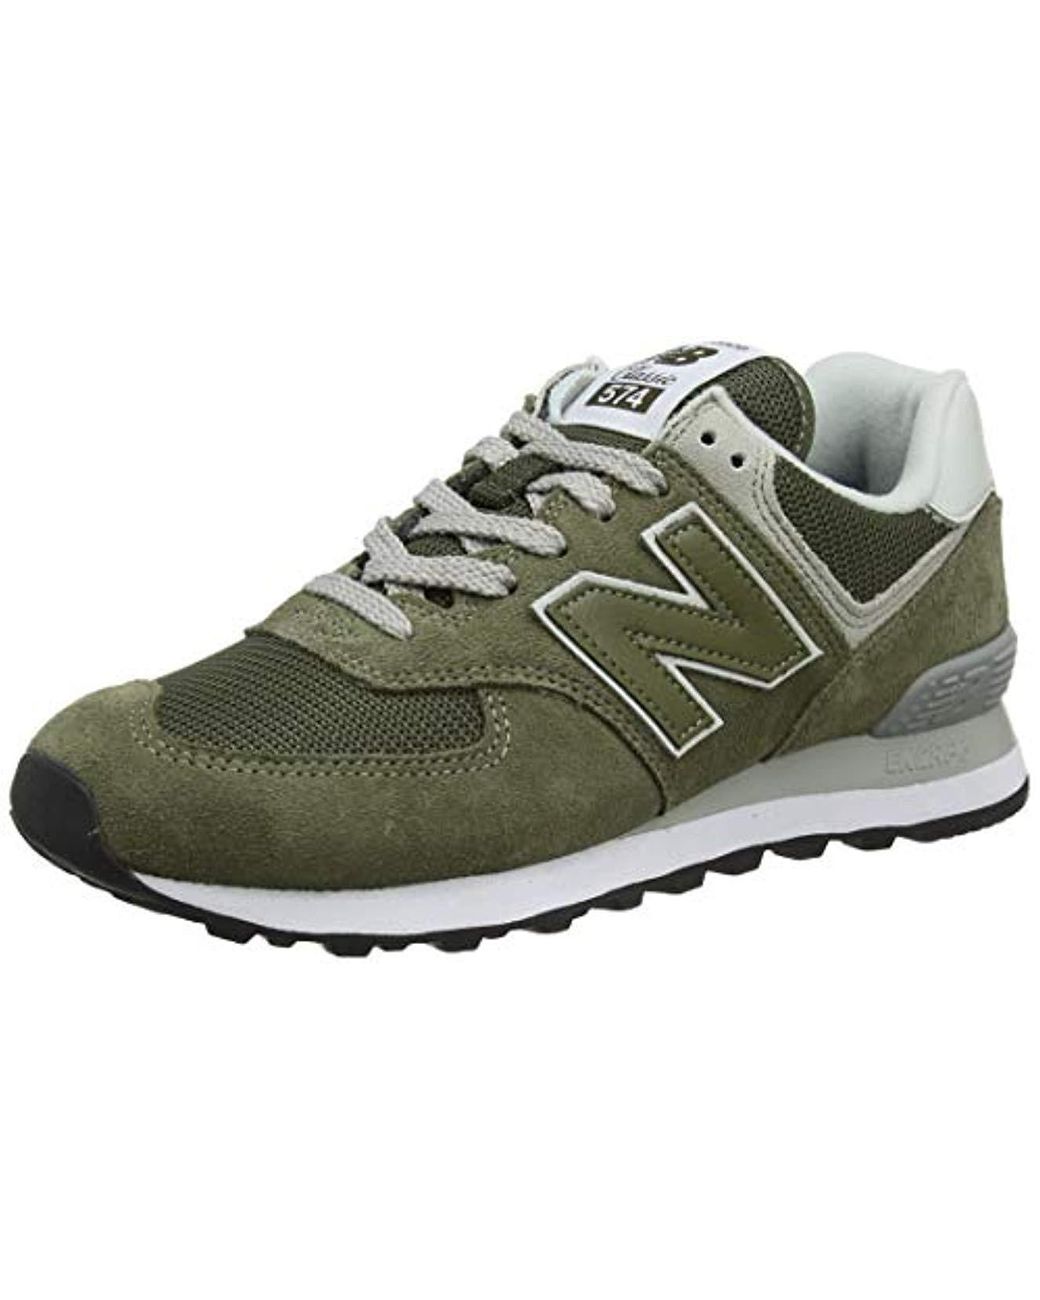 New Balance 574v2 Sneaker in Olive (Green) | Lyst